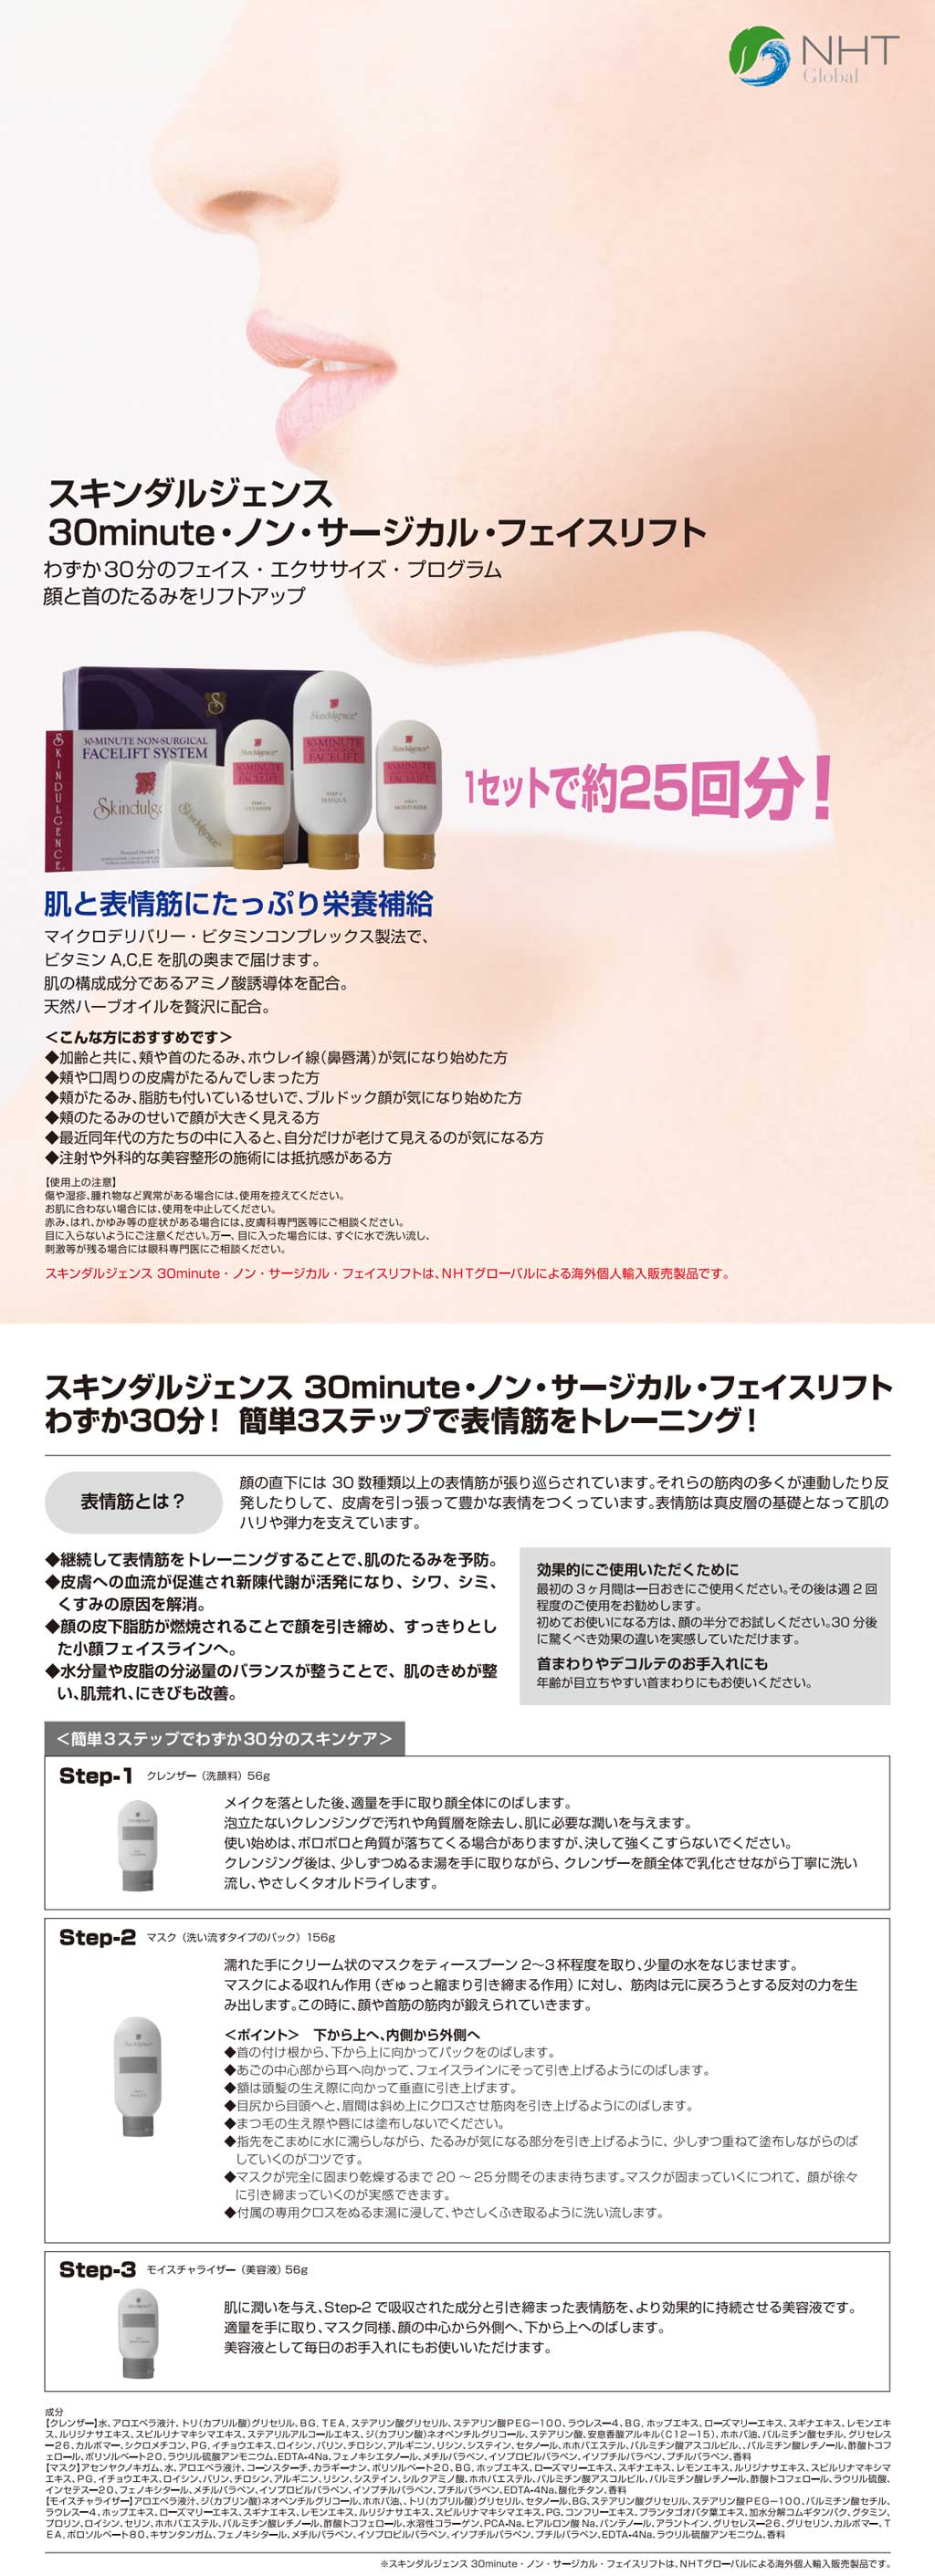 skindulgence facelift japanese info nht global